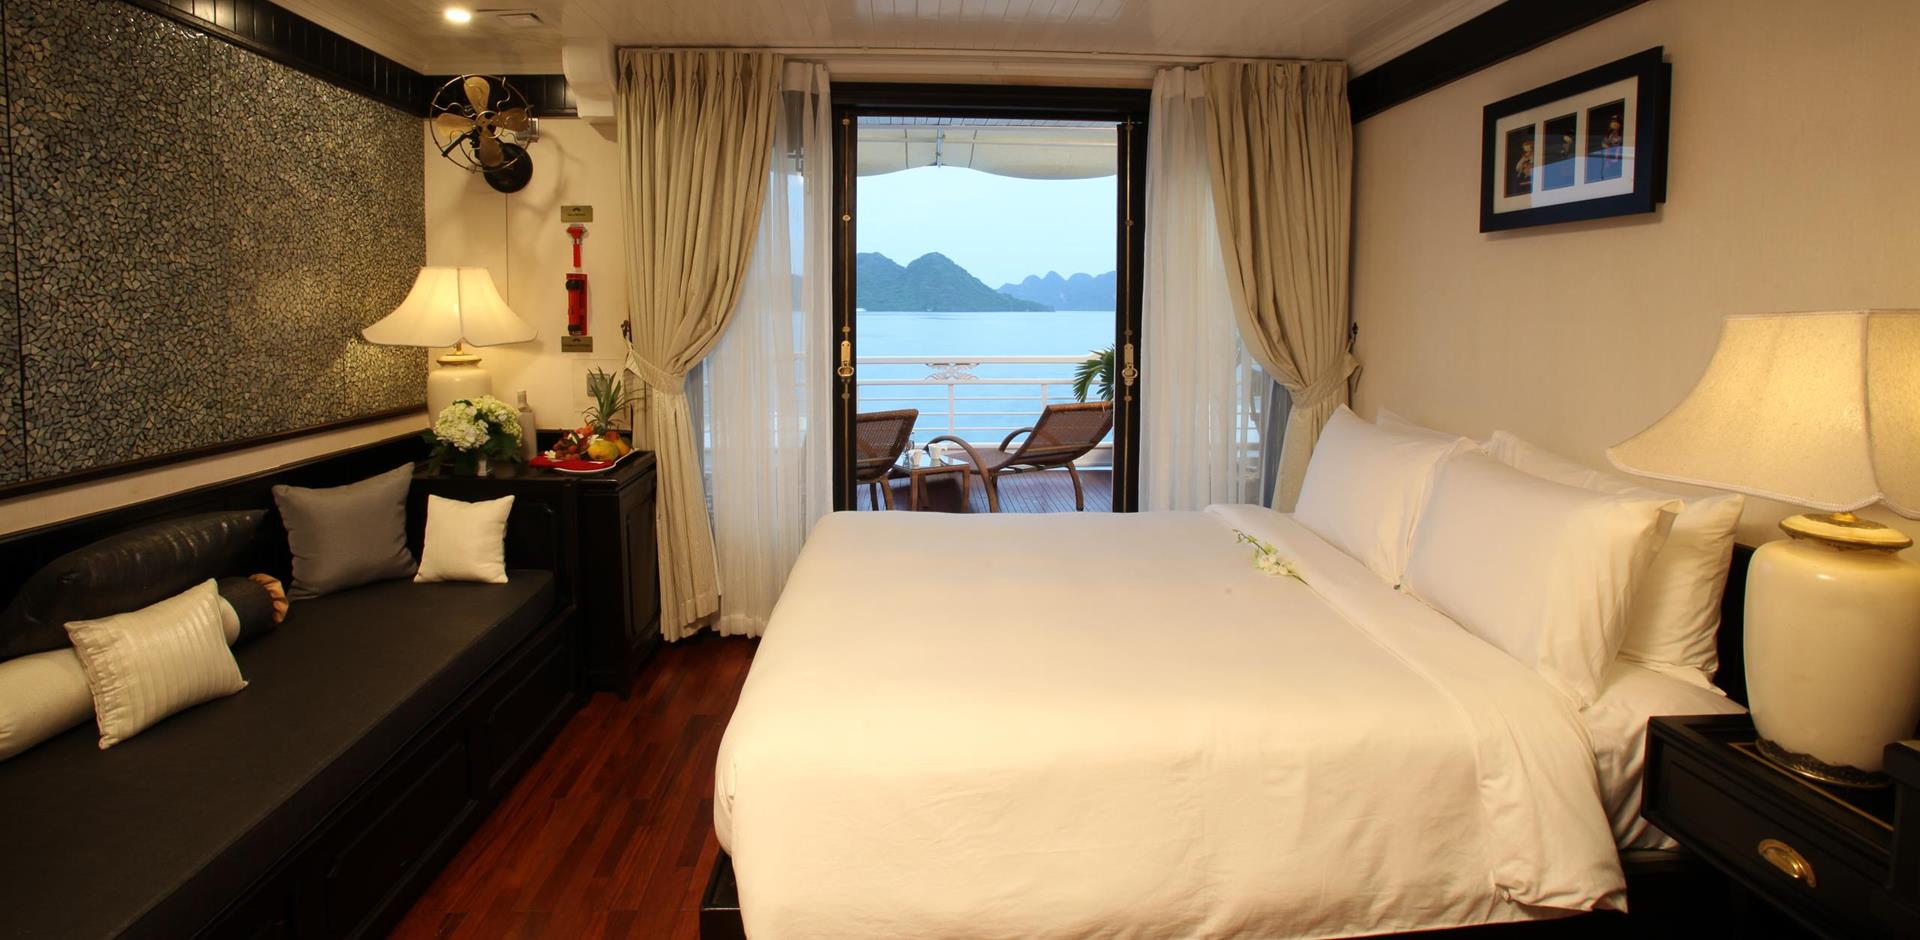 Bedroom, Au Co Cruise, Vietnam